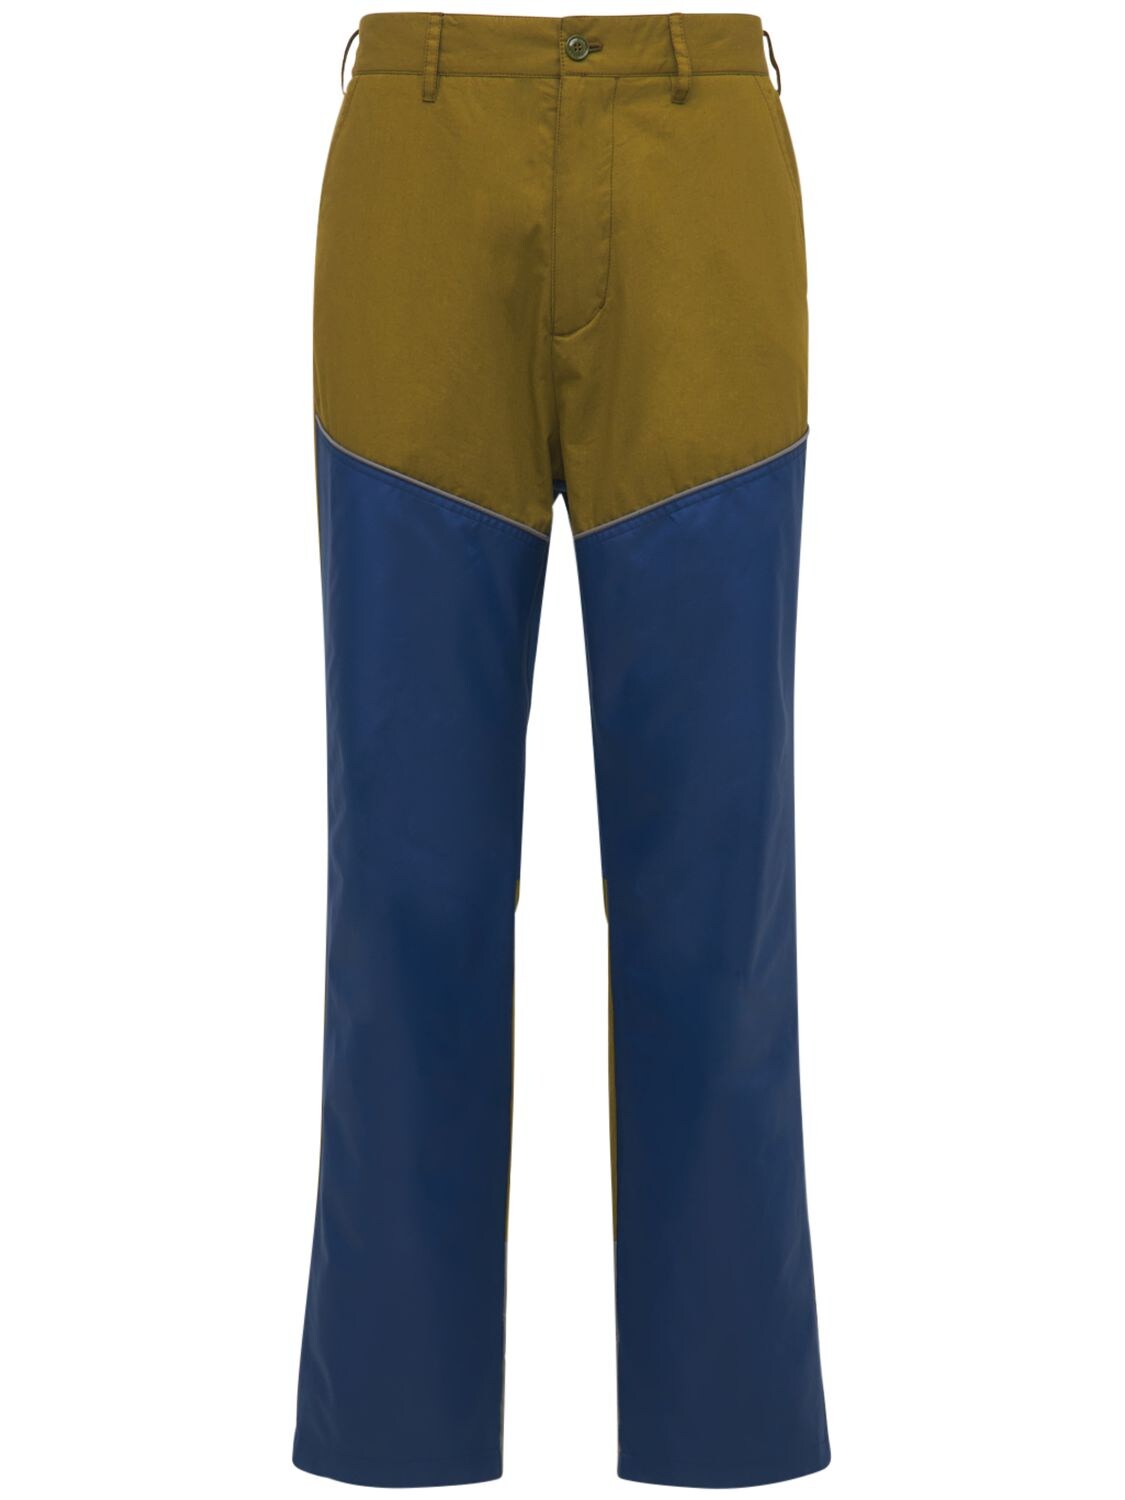 MONCLER GENIUS MONCLER 1952 NYLON CANVAS trousers,74I3GK022-NZGY0